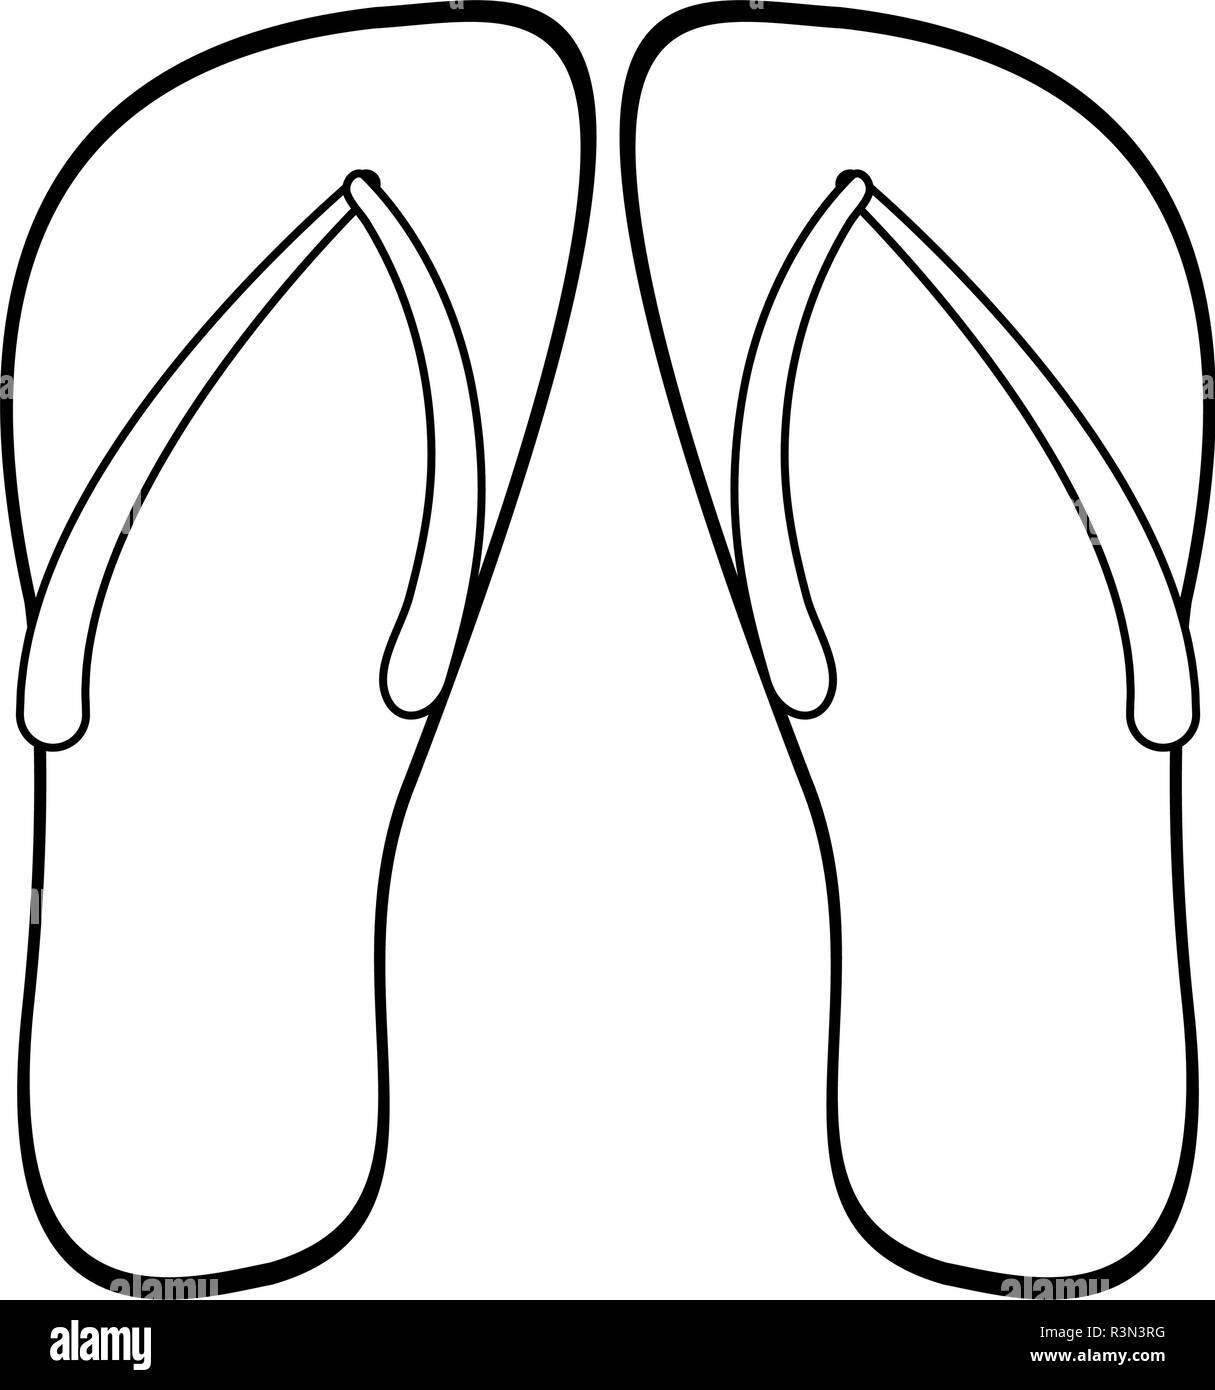 Black flip flop sandals Stock Vector Images - Alamy